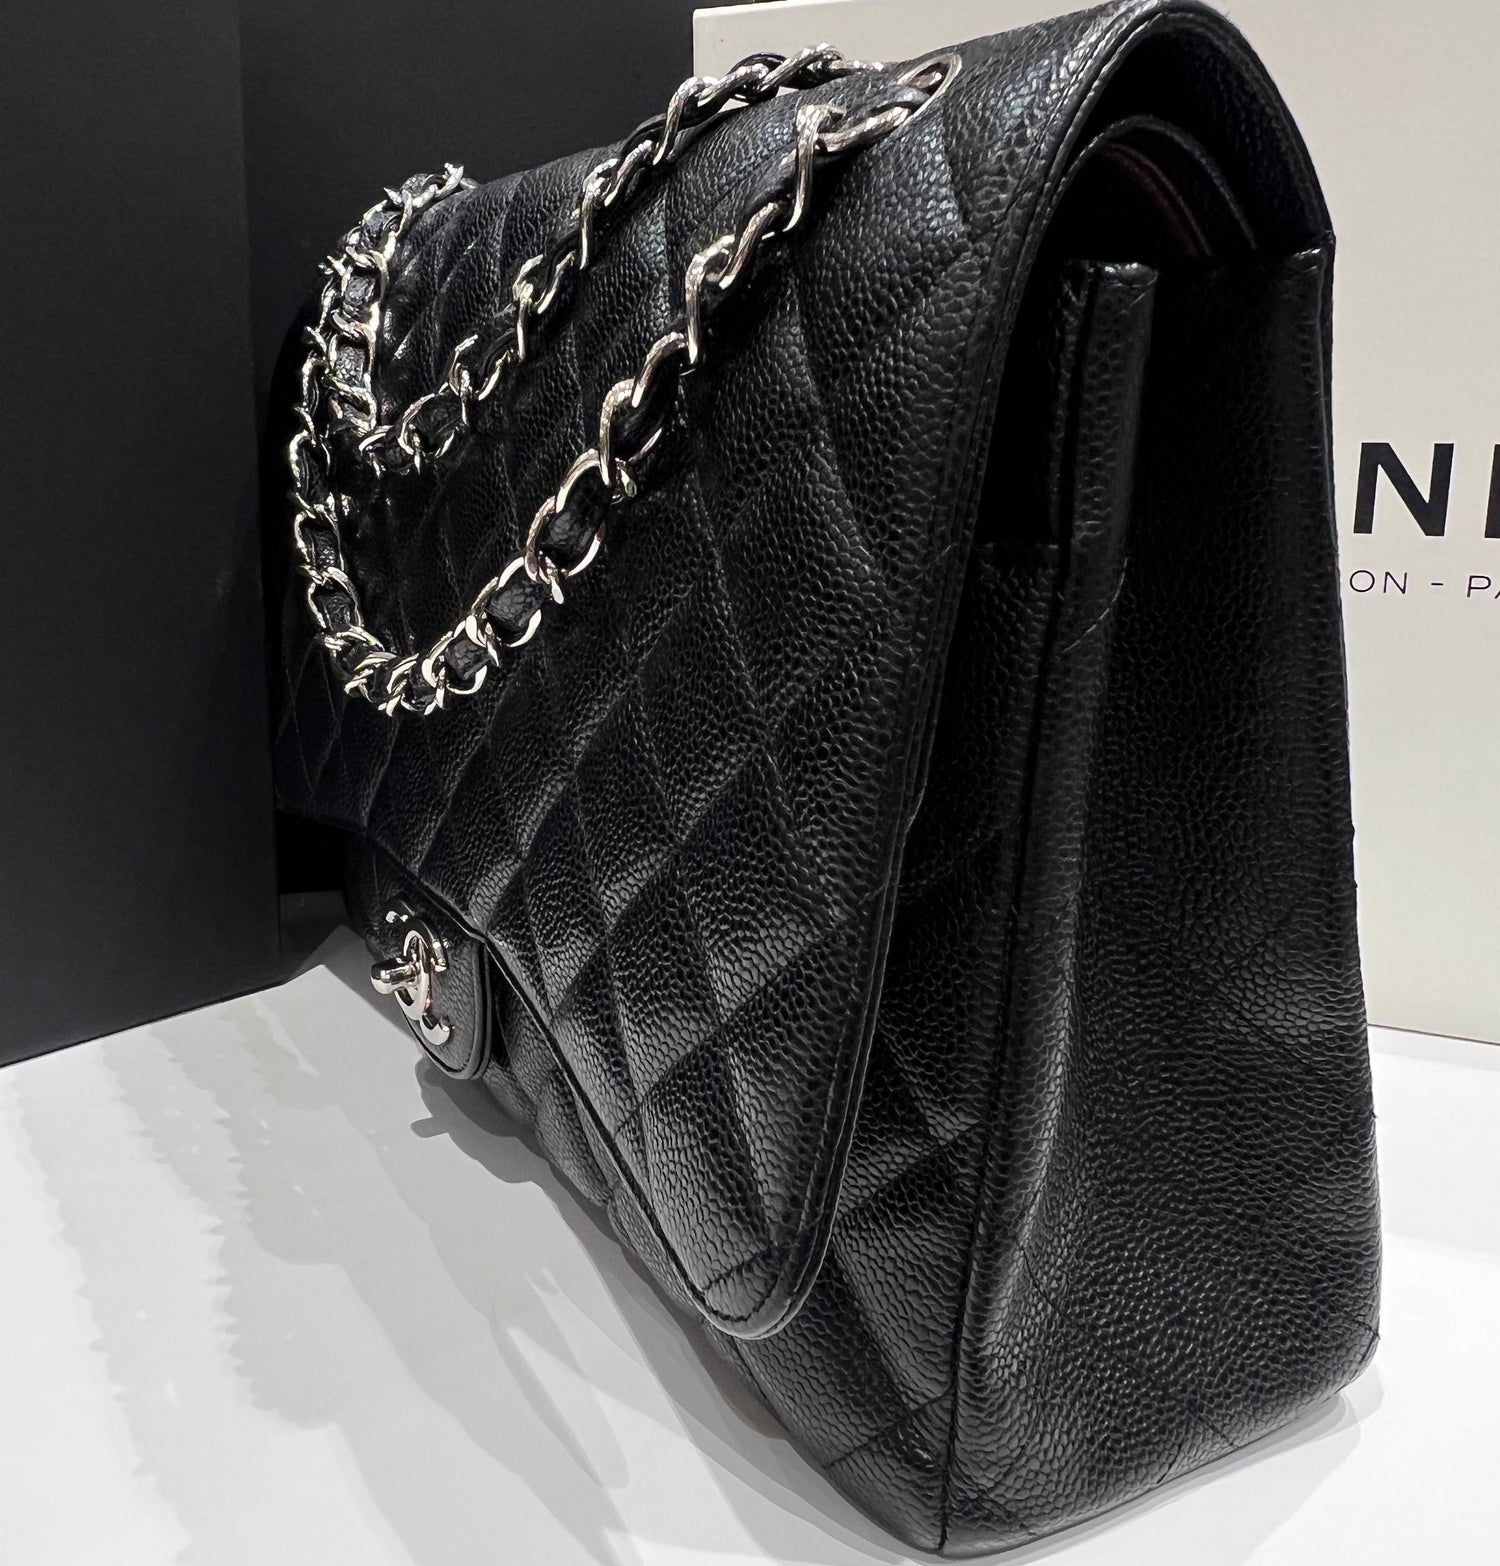 Chanel - sac classique maxi jumbo cuir caviar noir